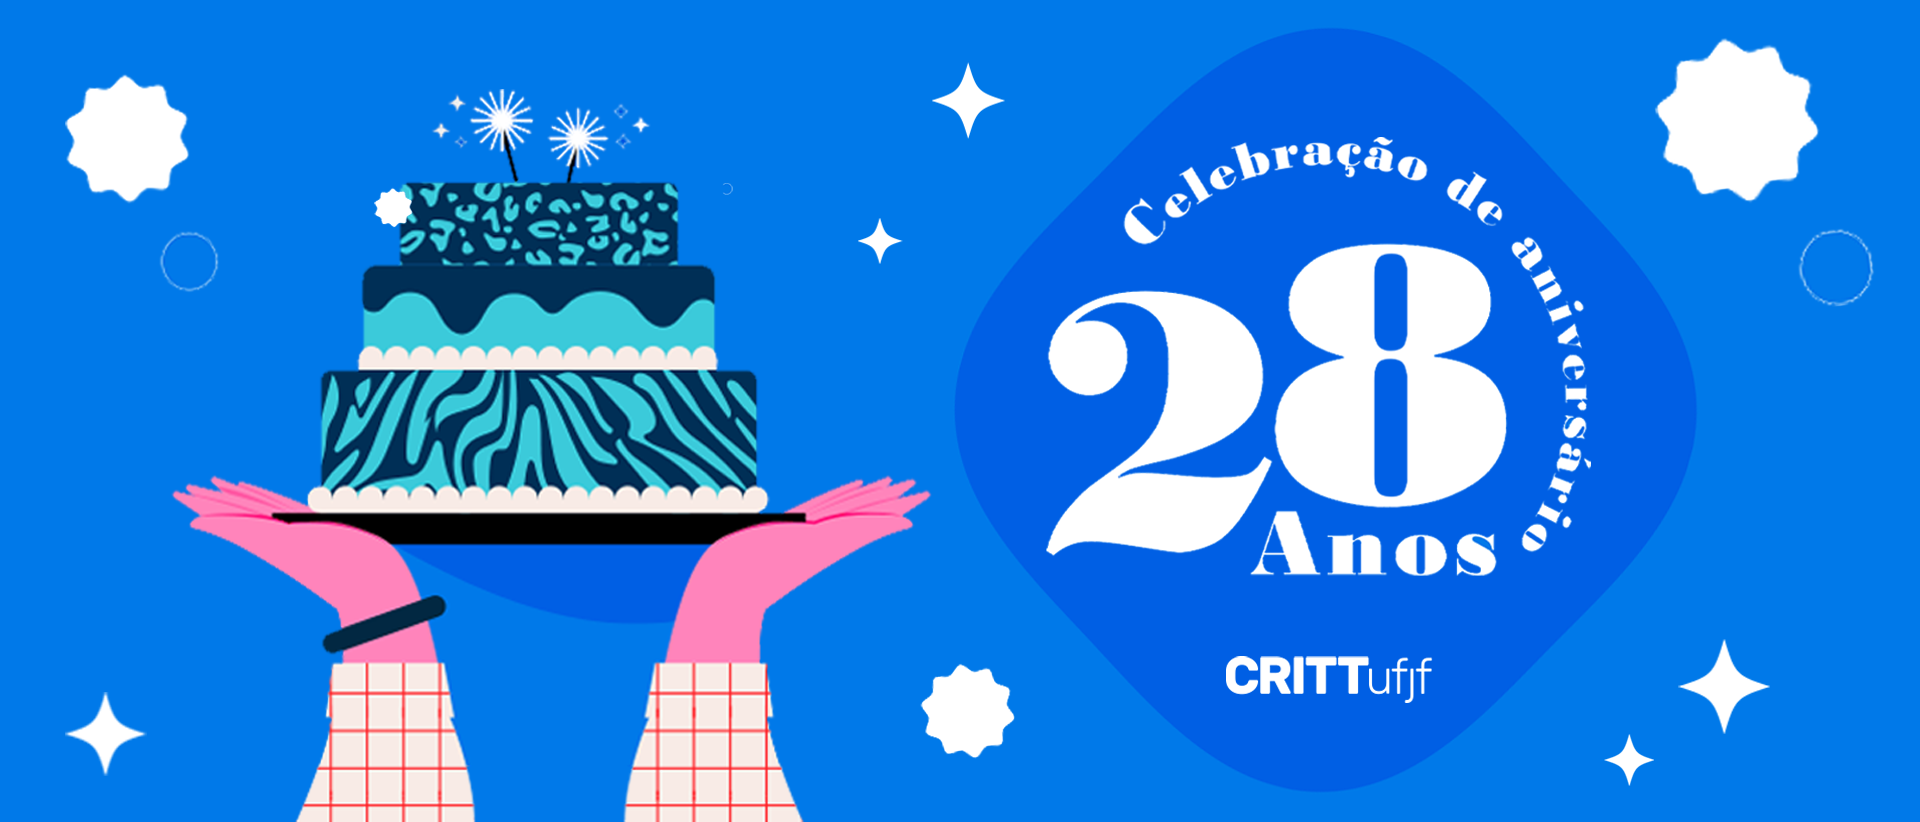 28 anos do Critt